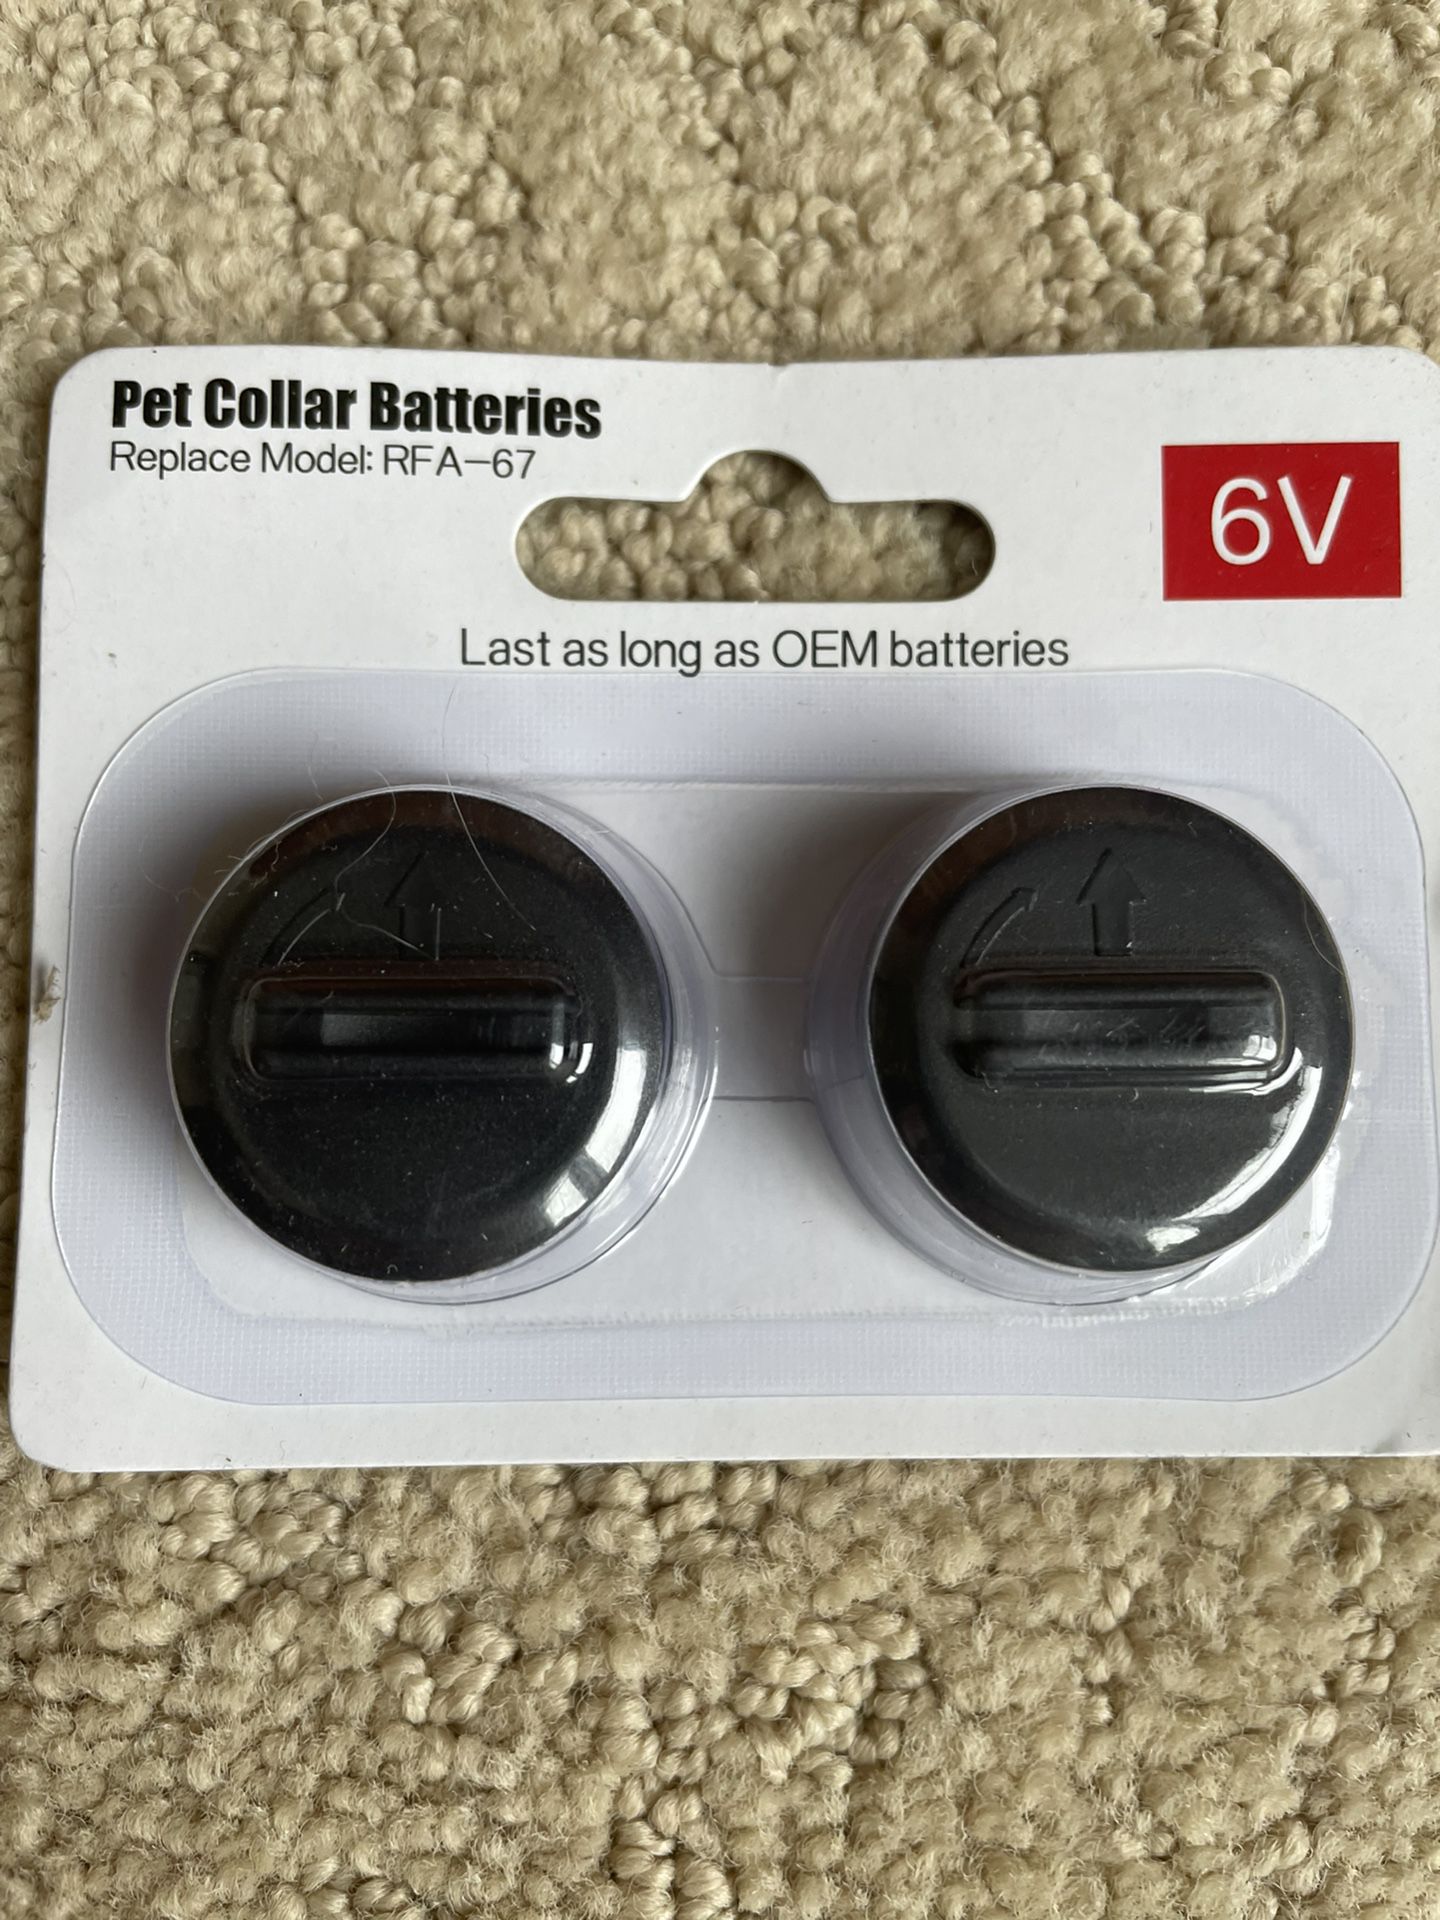 PetSafe Pet Collar Batteries RFA-67 6V Qty. 12